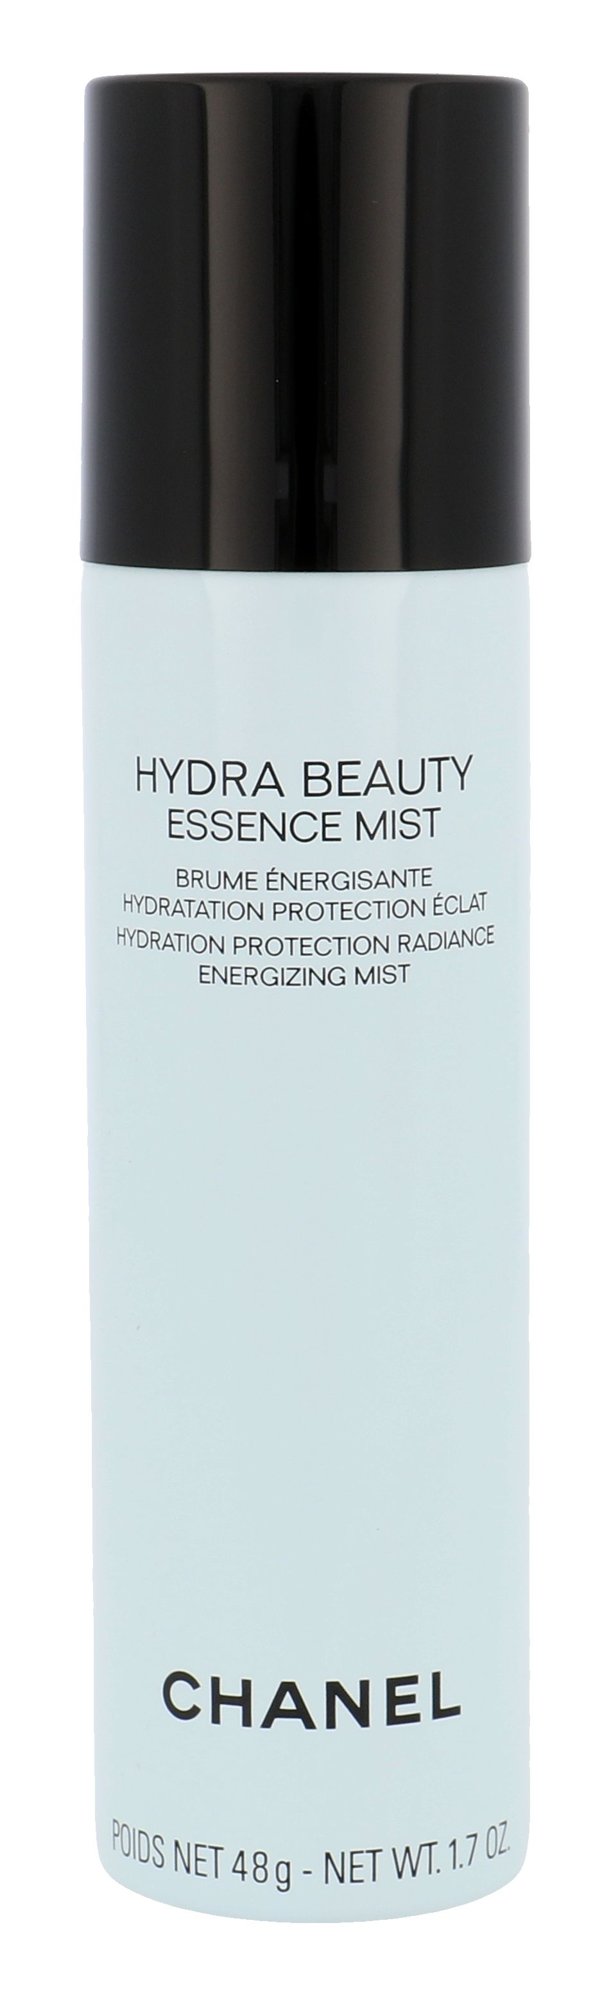 hydra beauty essence mist